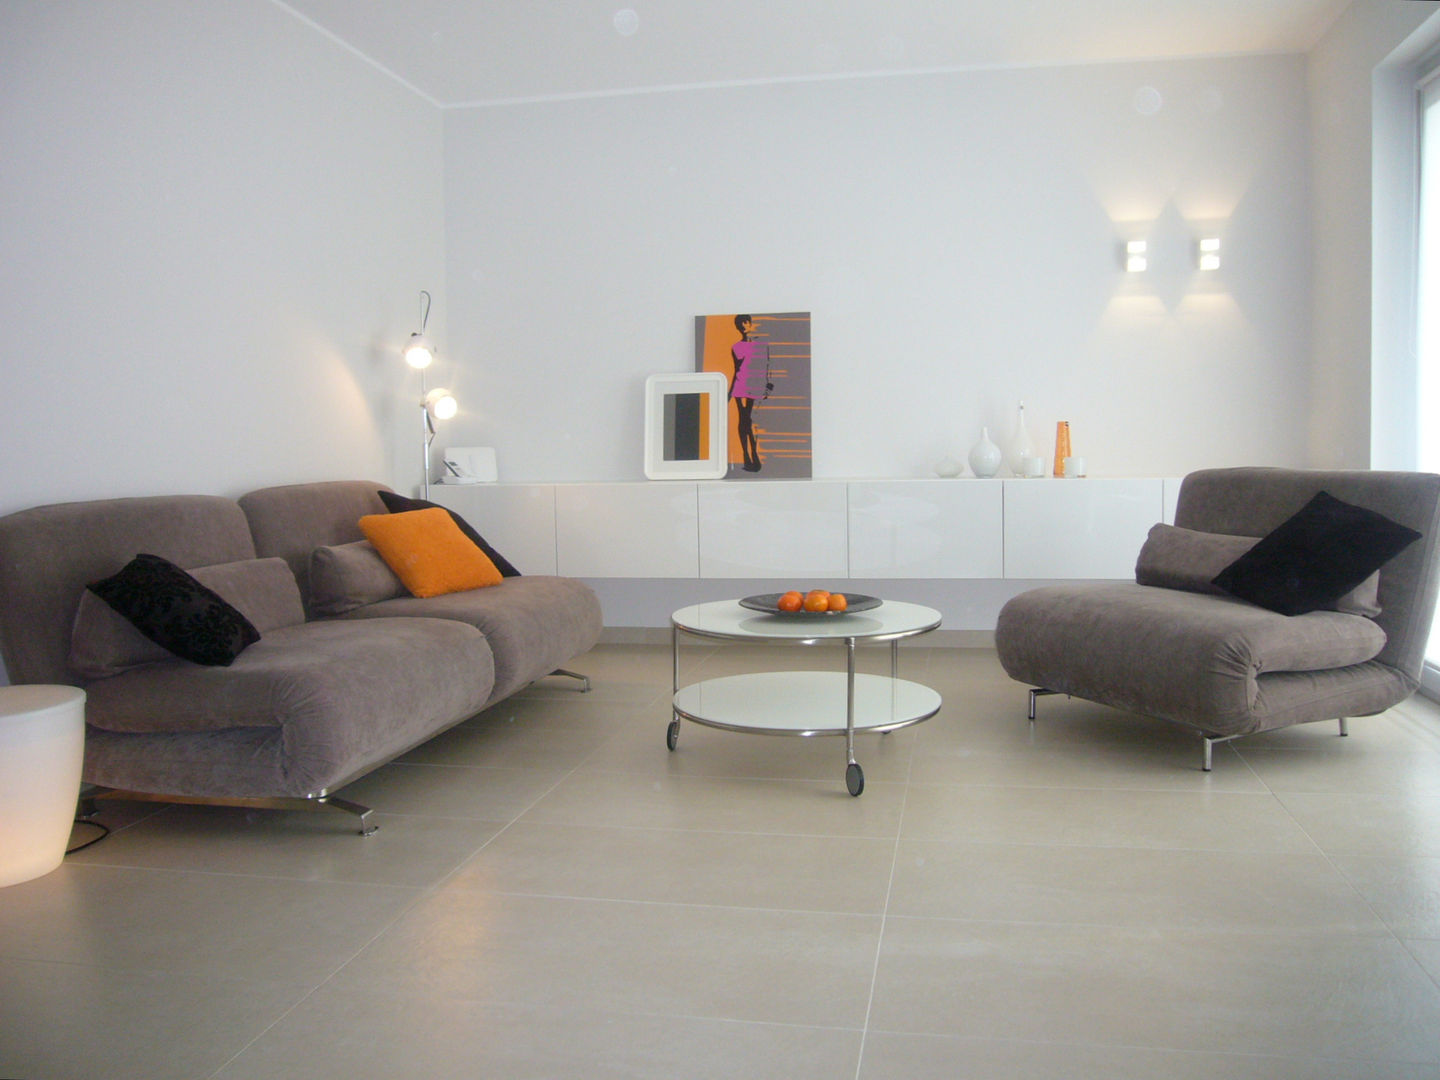 Raumgestaltung - Einfamilienhaus in Selm, raum² - wir machen wohnen raum² - wir machen wohnen Maisons modernes